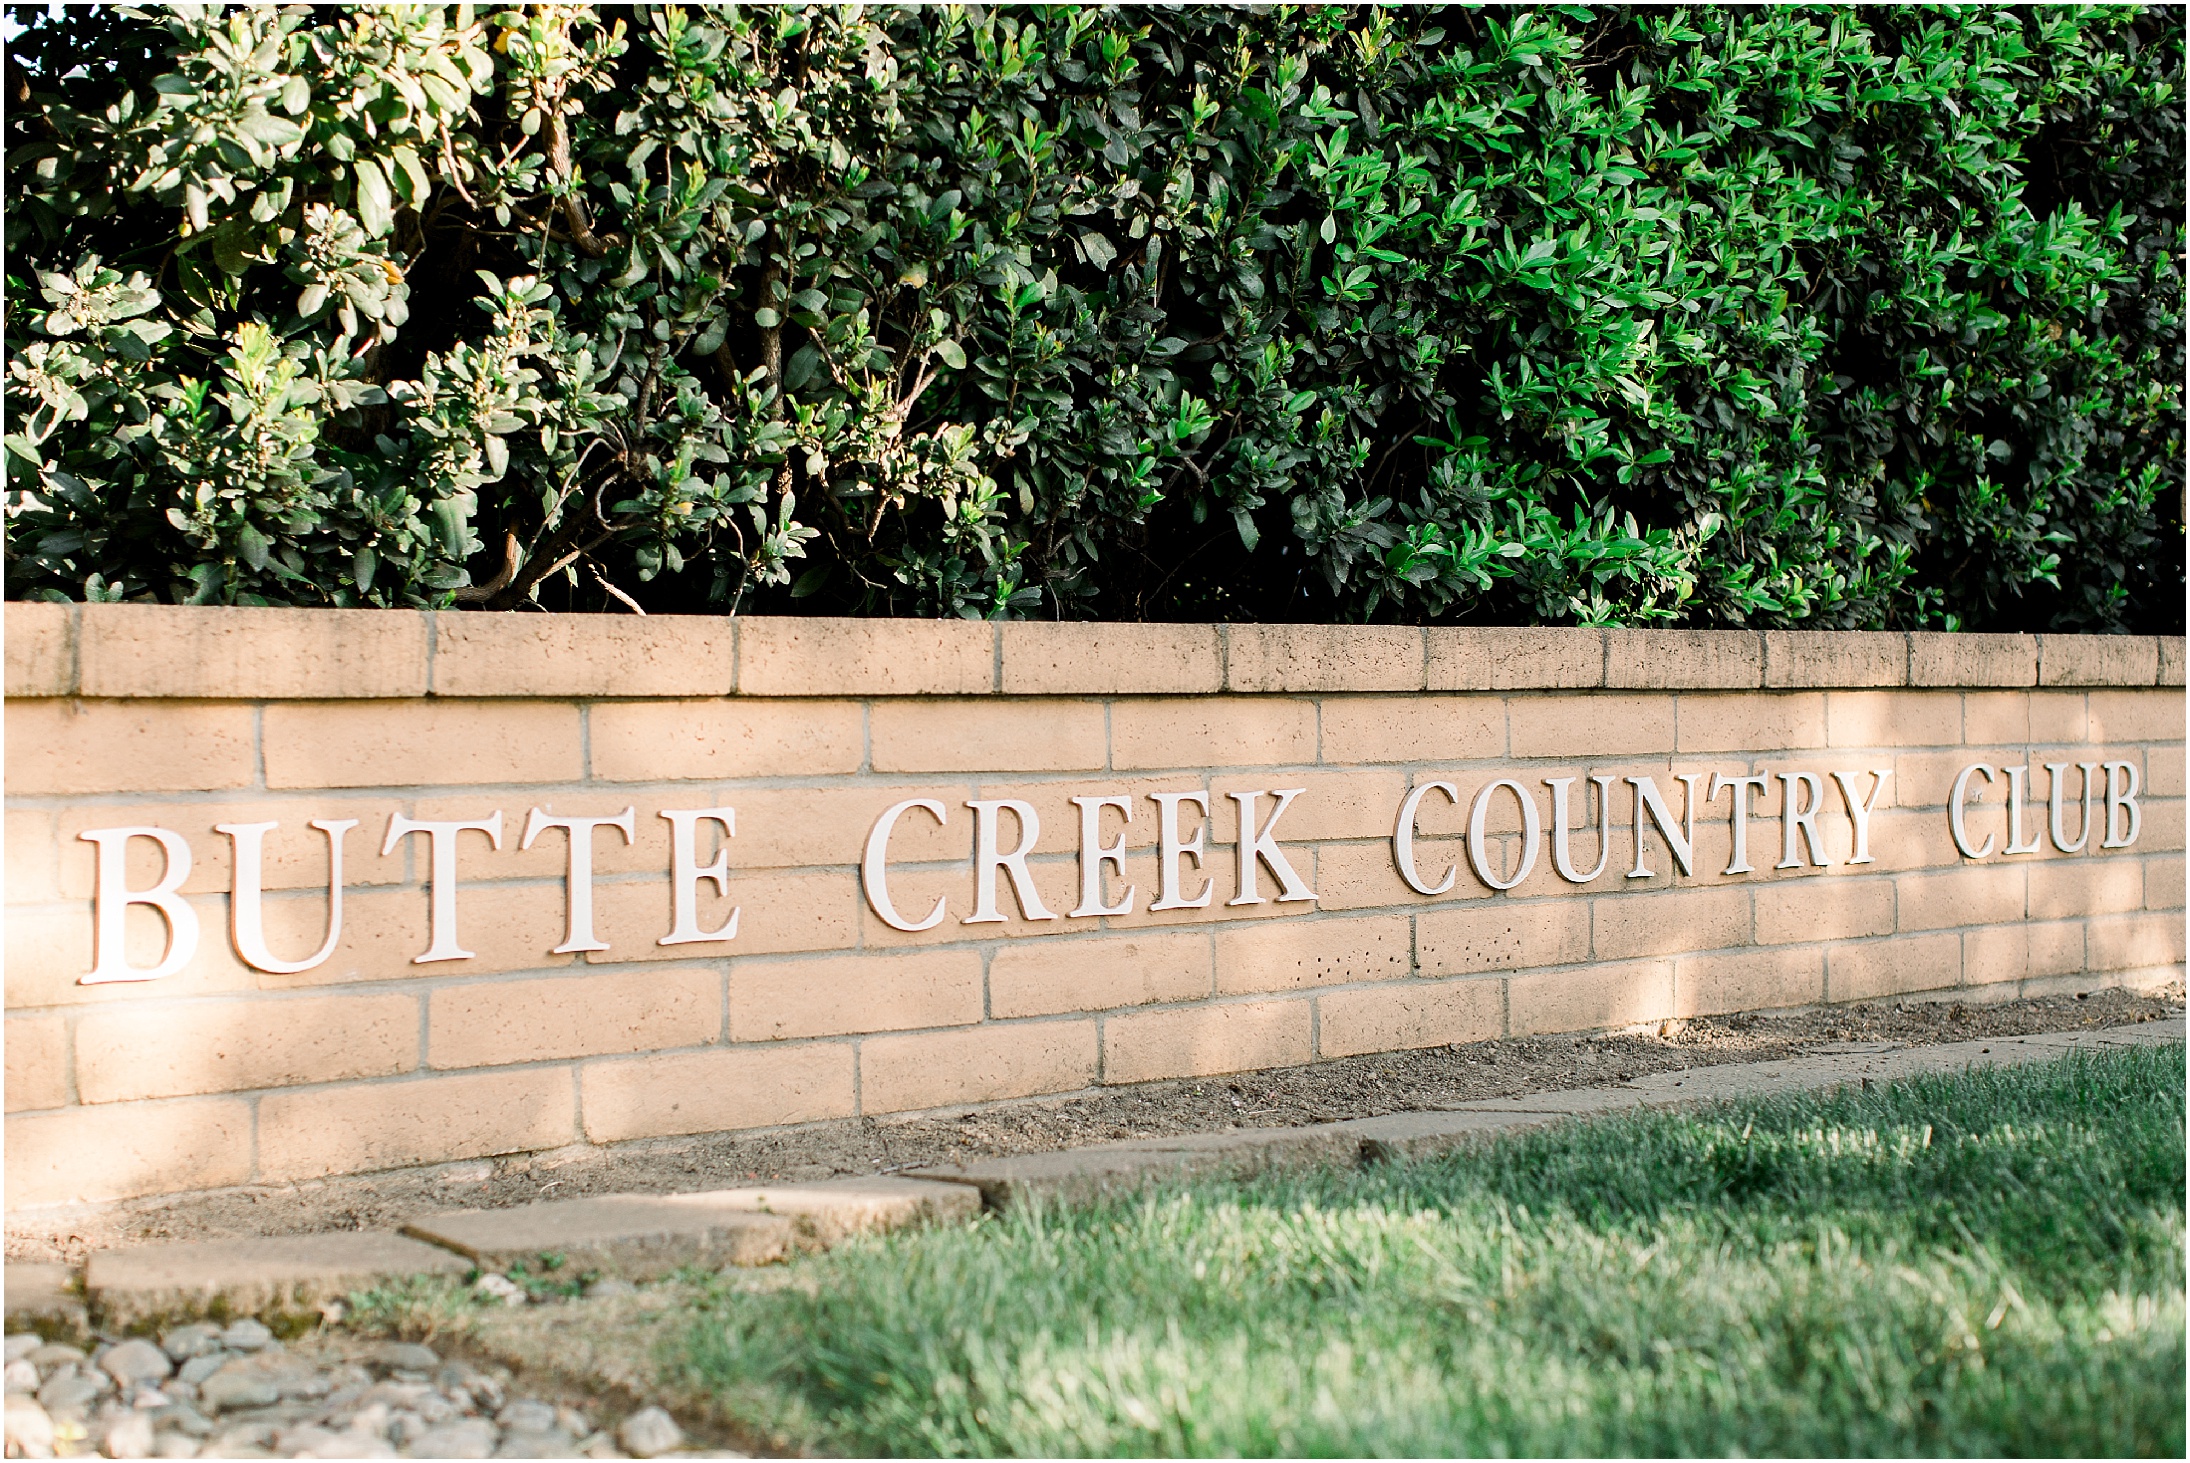 Northern California Fertility Foundation Fundraiser Butte Creek Country Club Chico CA,